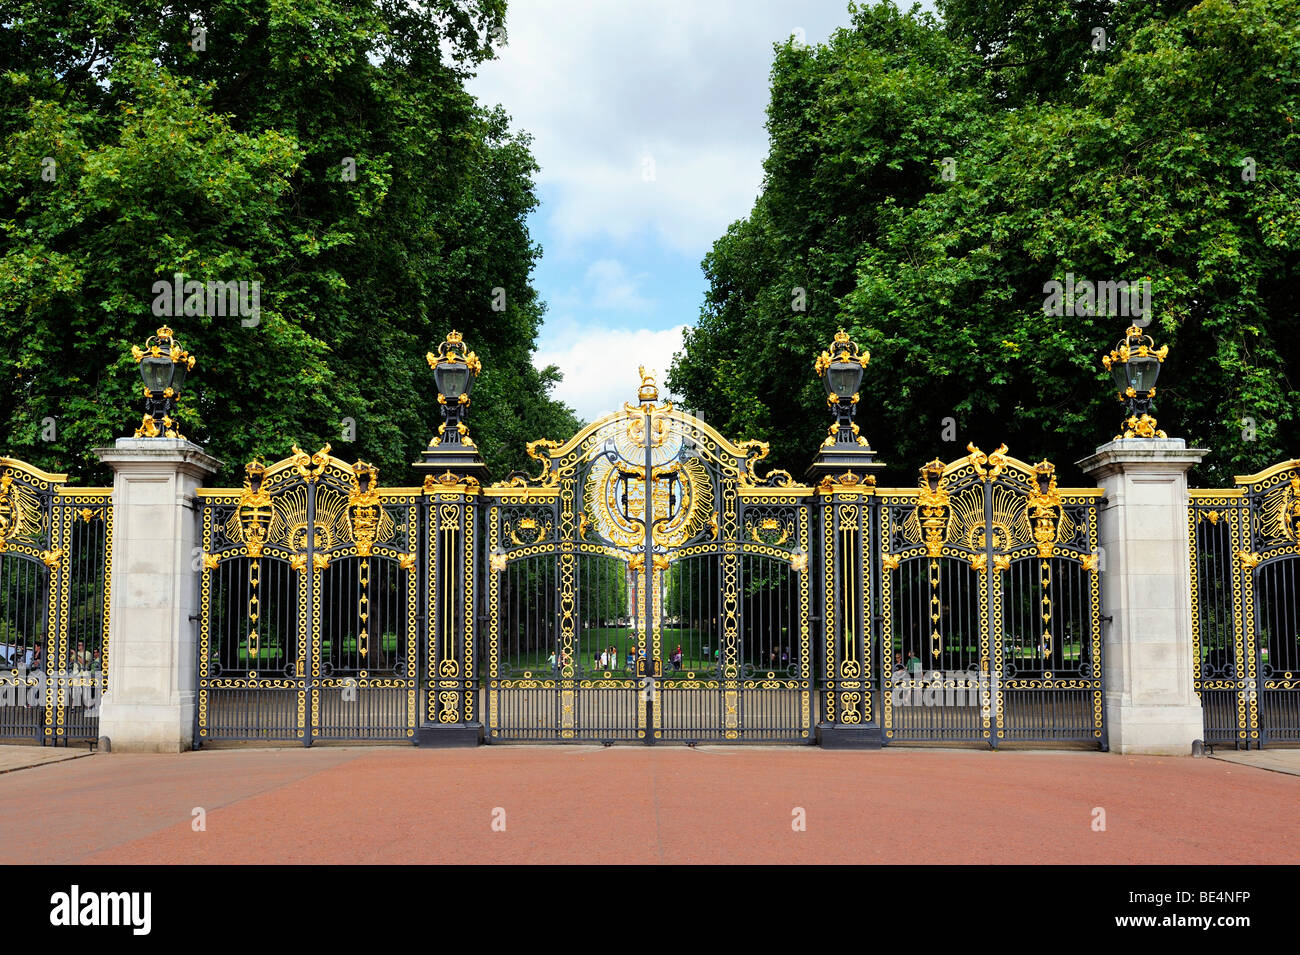 Wrought iron gates of the Buckingham Palace, in the back the St James Park, London, England, United Kingdom, Europe Stock Photo